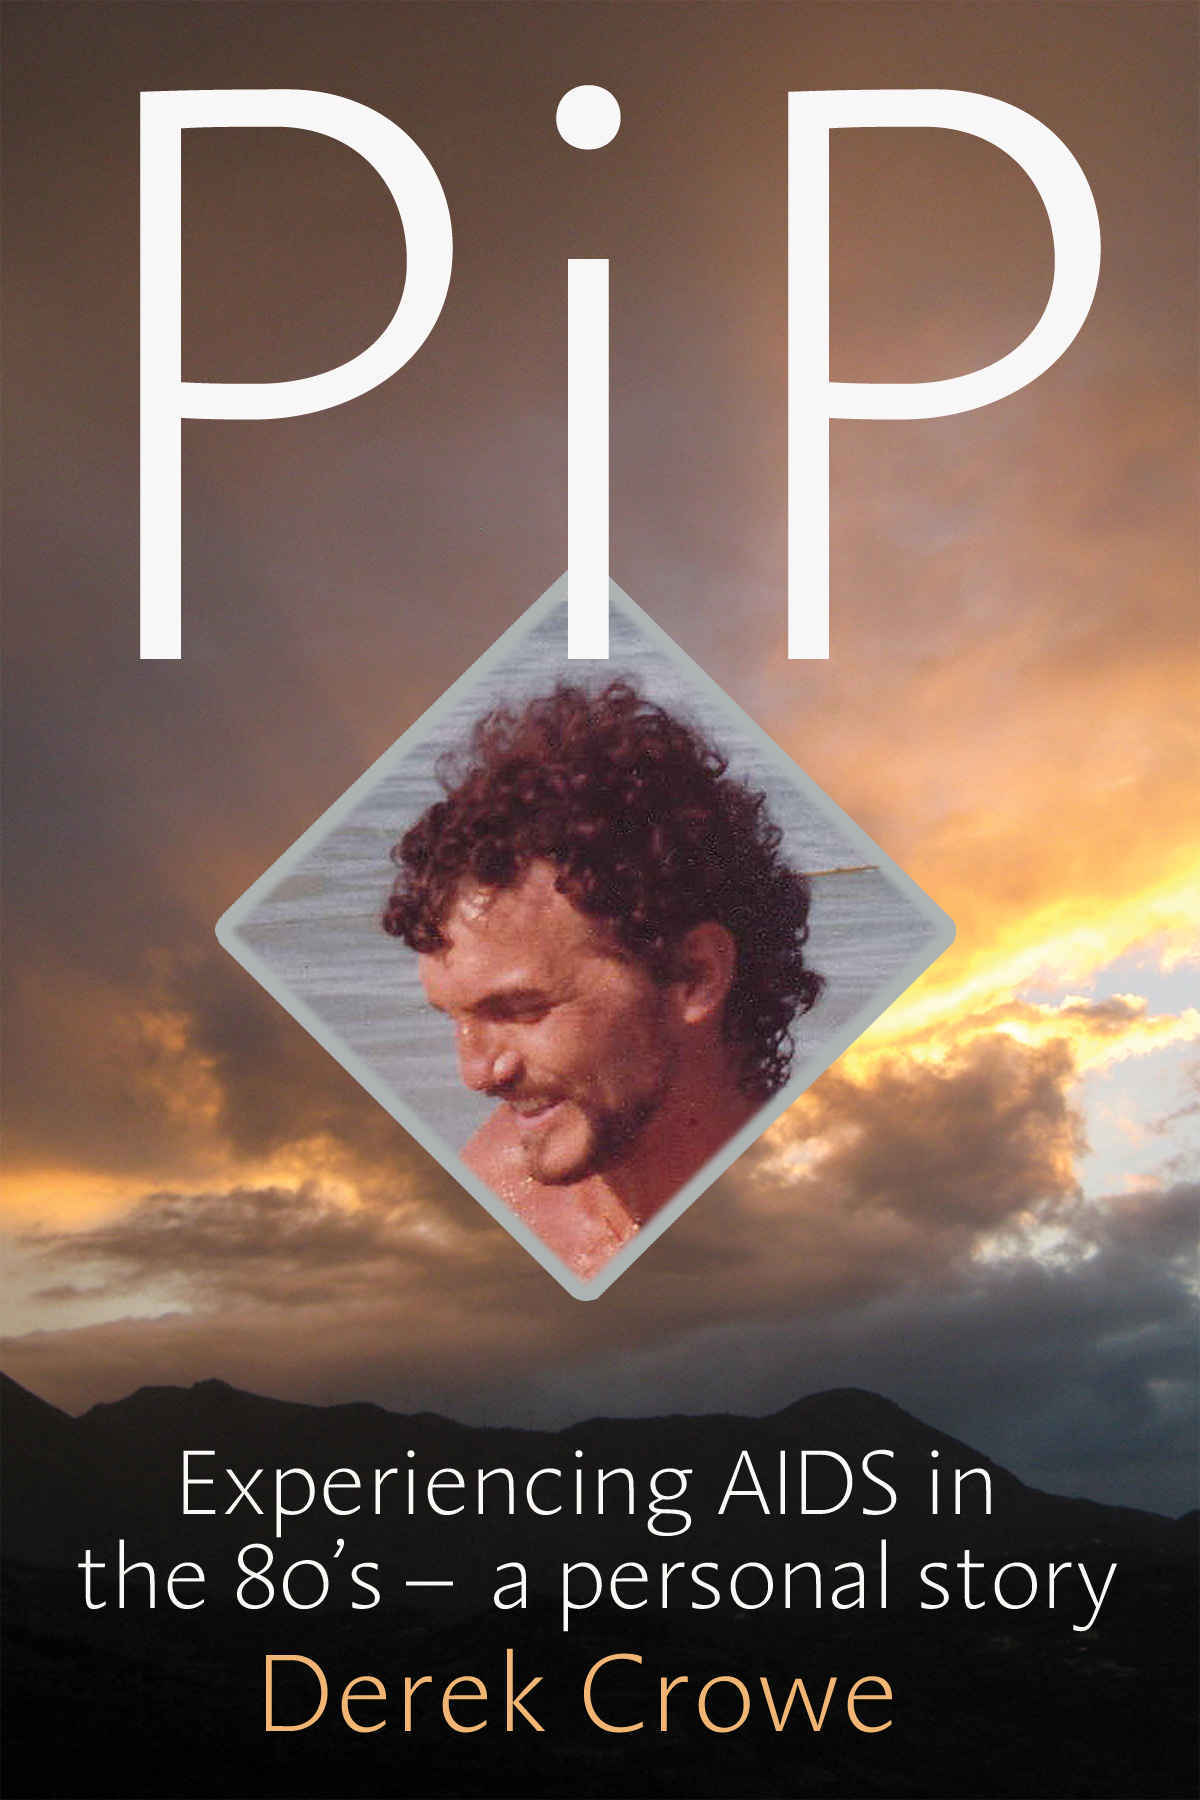 What was it like to live through the 80’s AIDS epidemic? Derek Crowe writes a memoir